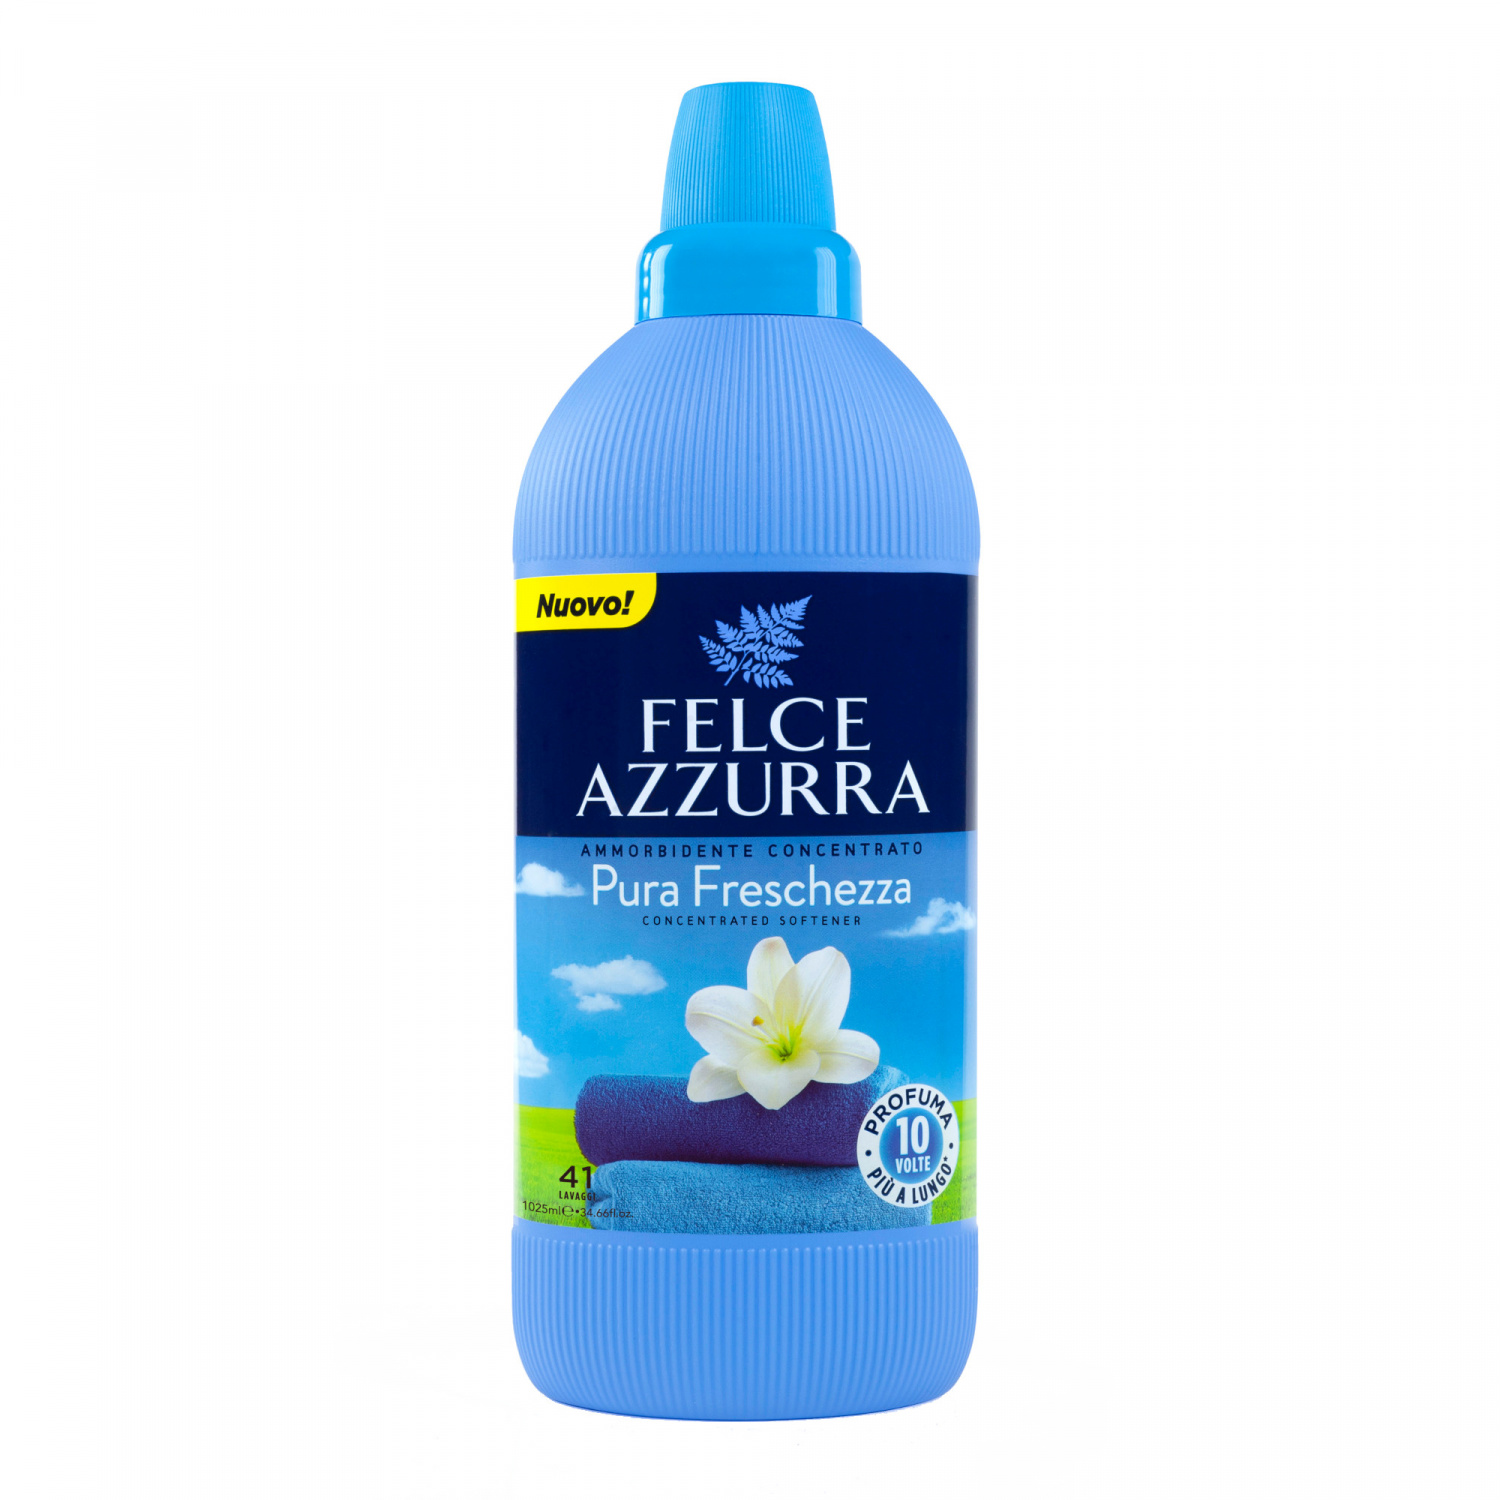 Felce Azzurra Concentrated Softener Pure Freshness 1025ml - интернет-магазин профессиональной косметики Spadream, изображение 37783